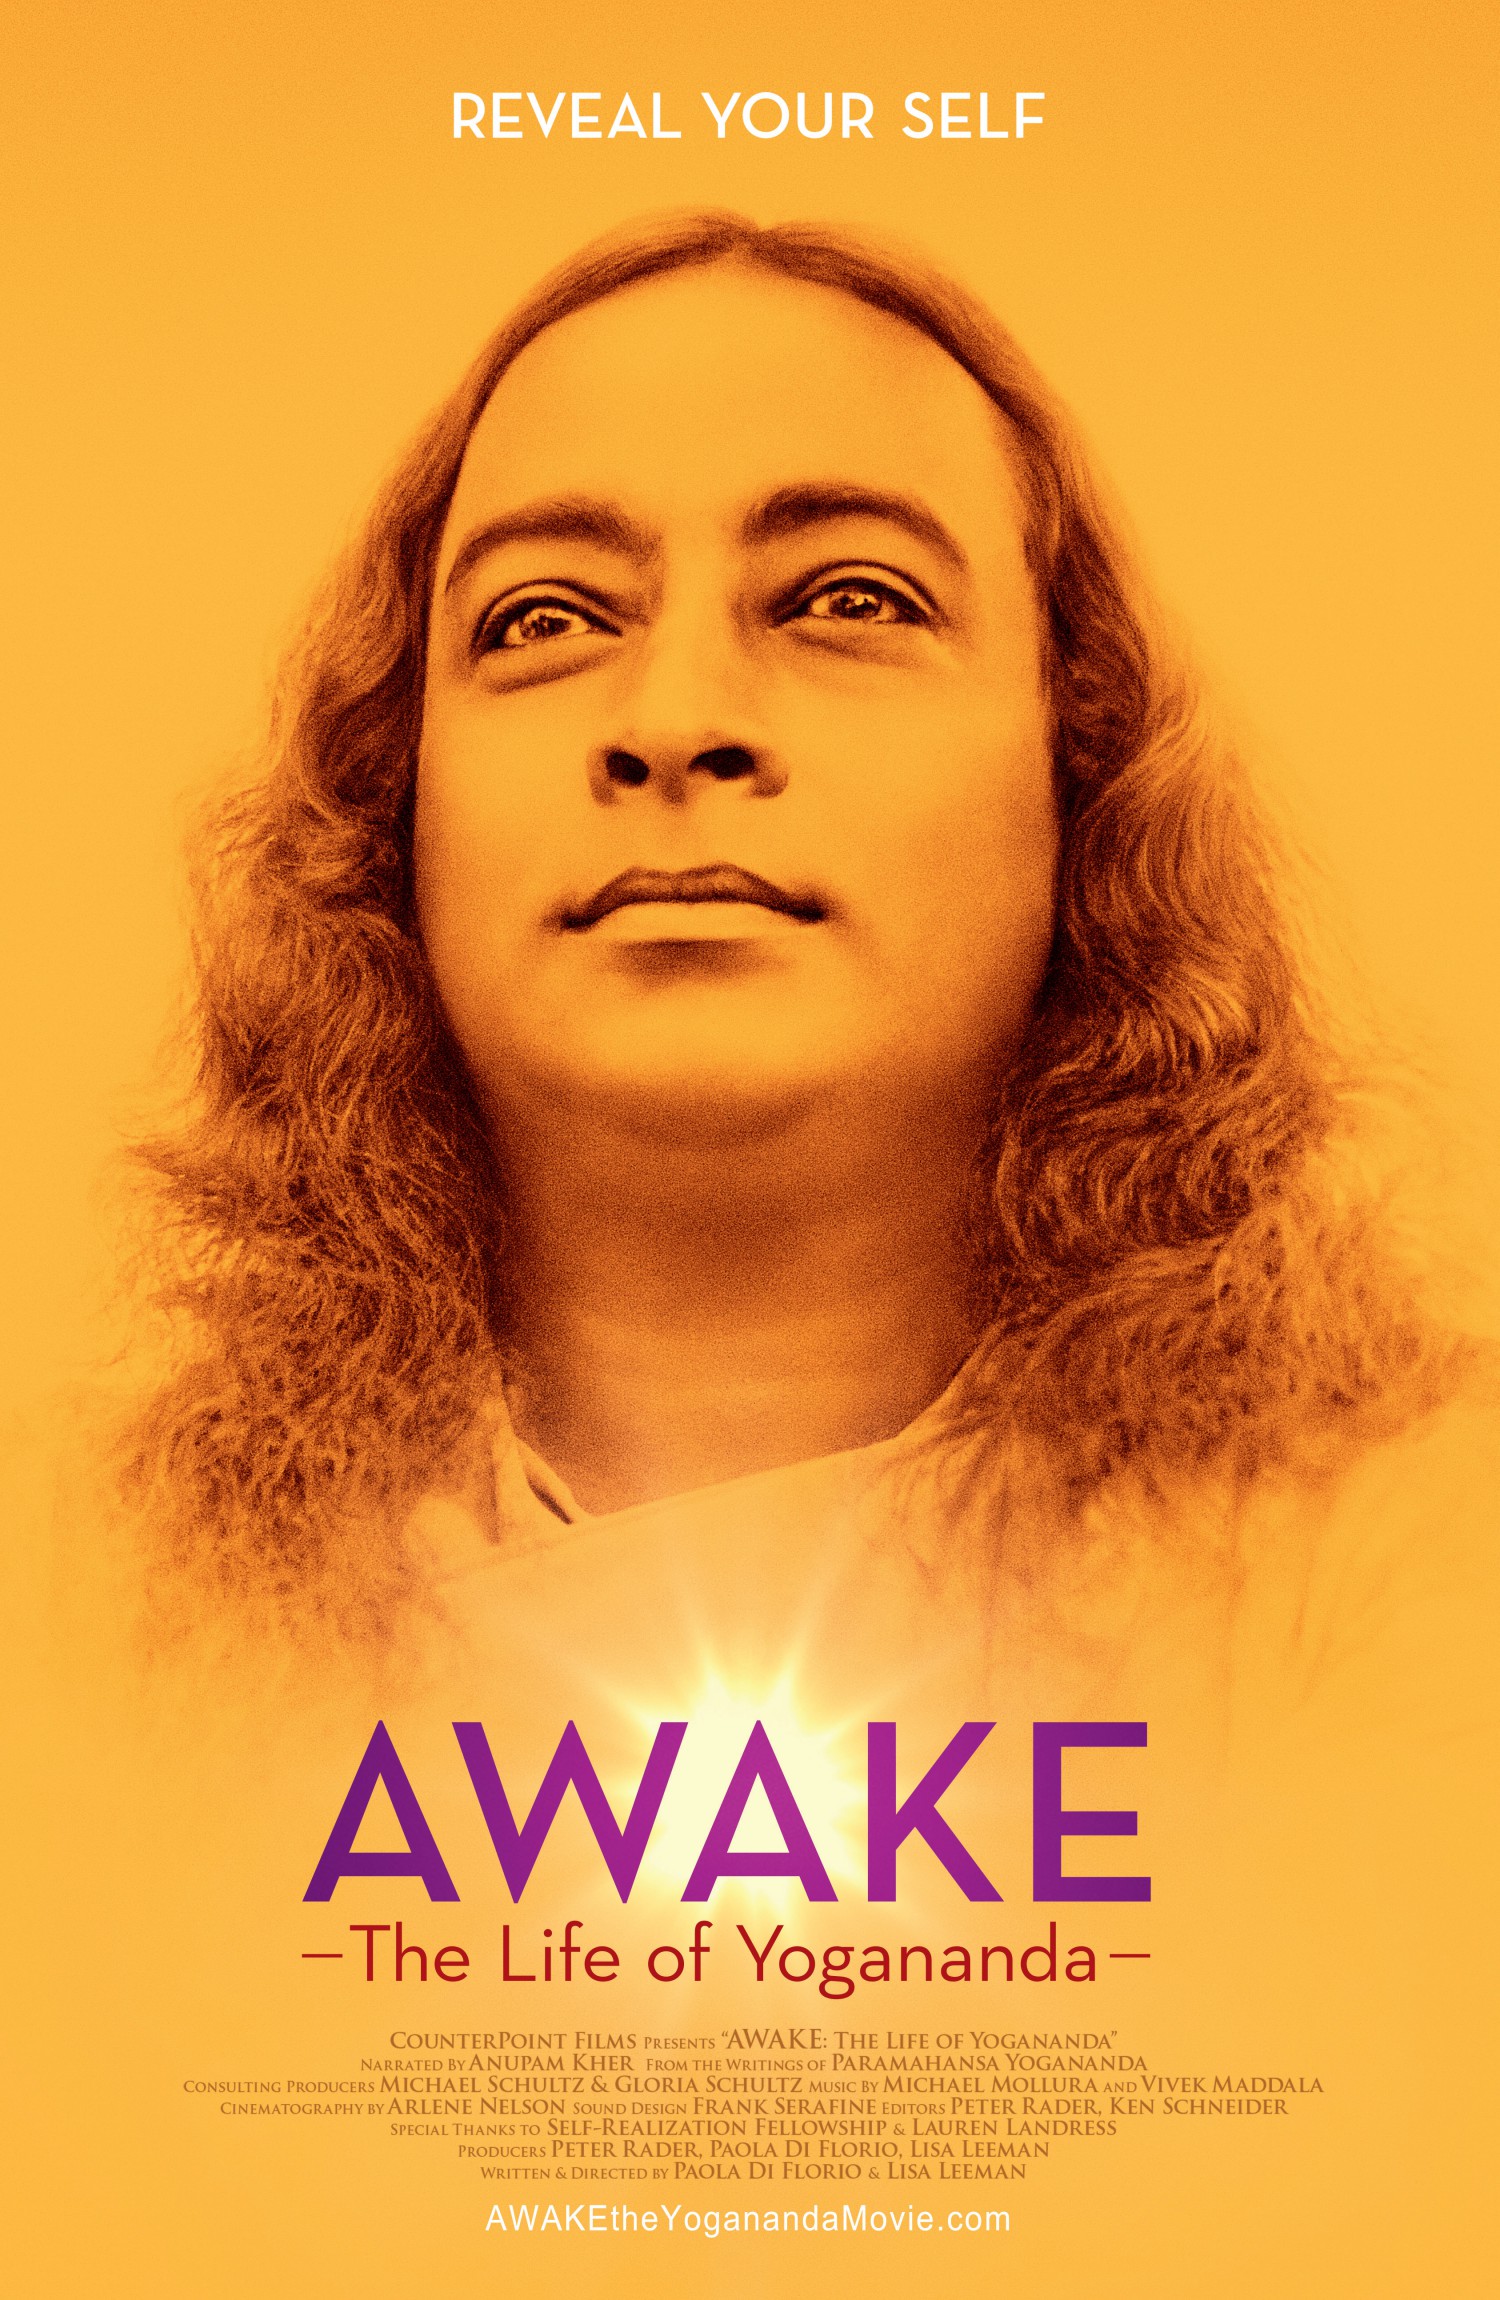 Photo of movie poster "Awake" The Life of Yogananda